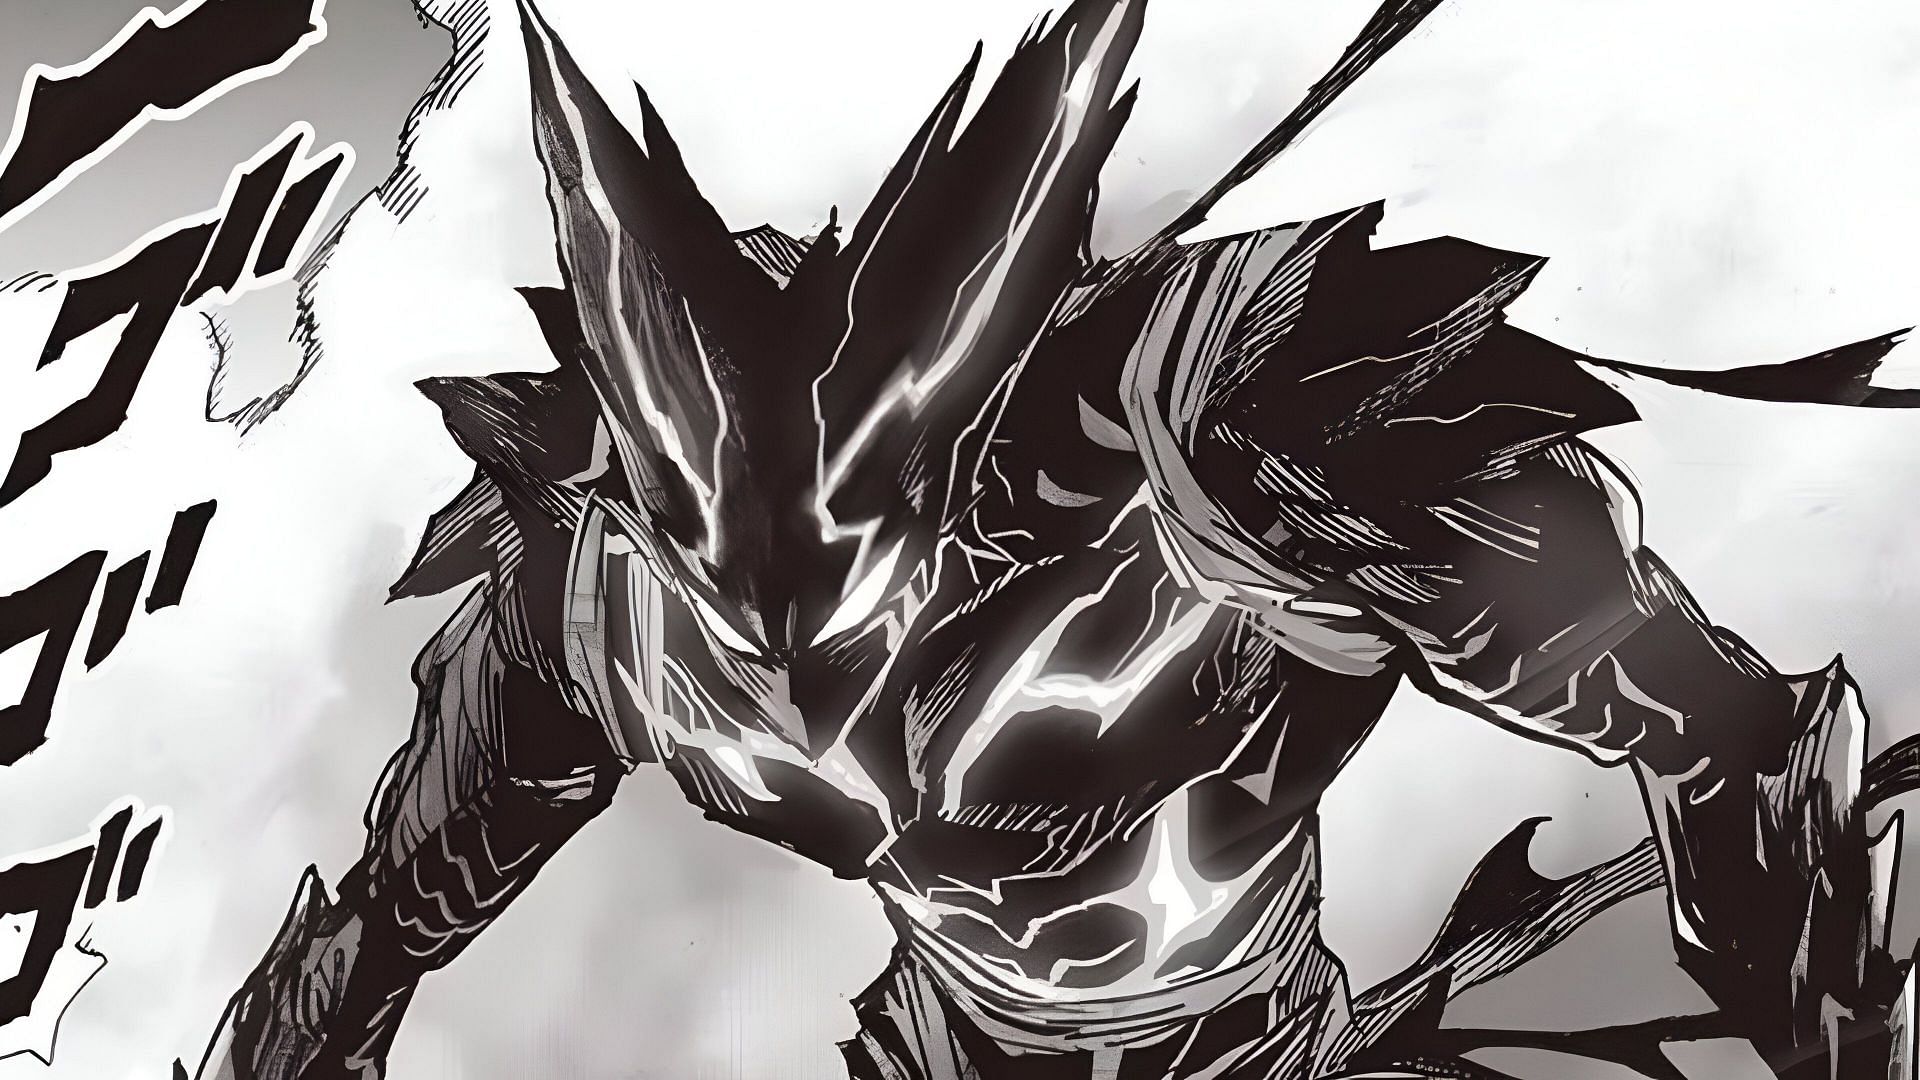 Monster Garou as seen in the One Punch Man manga (Image via Shueisha)